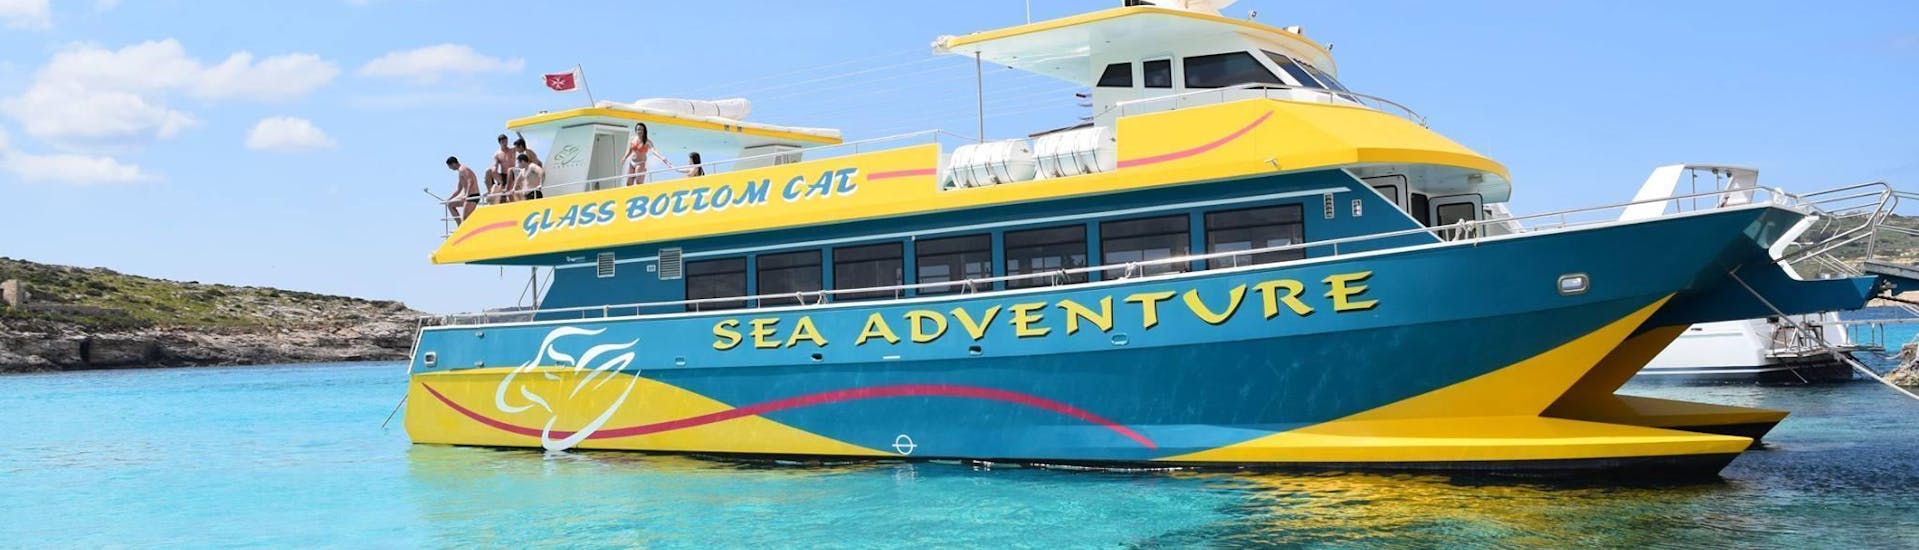 Les vacanciers profitent de la vue pendant leur balade en catamaran organisée par Sea Adventure Excursions.